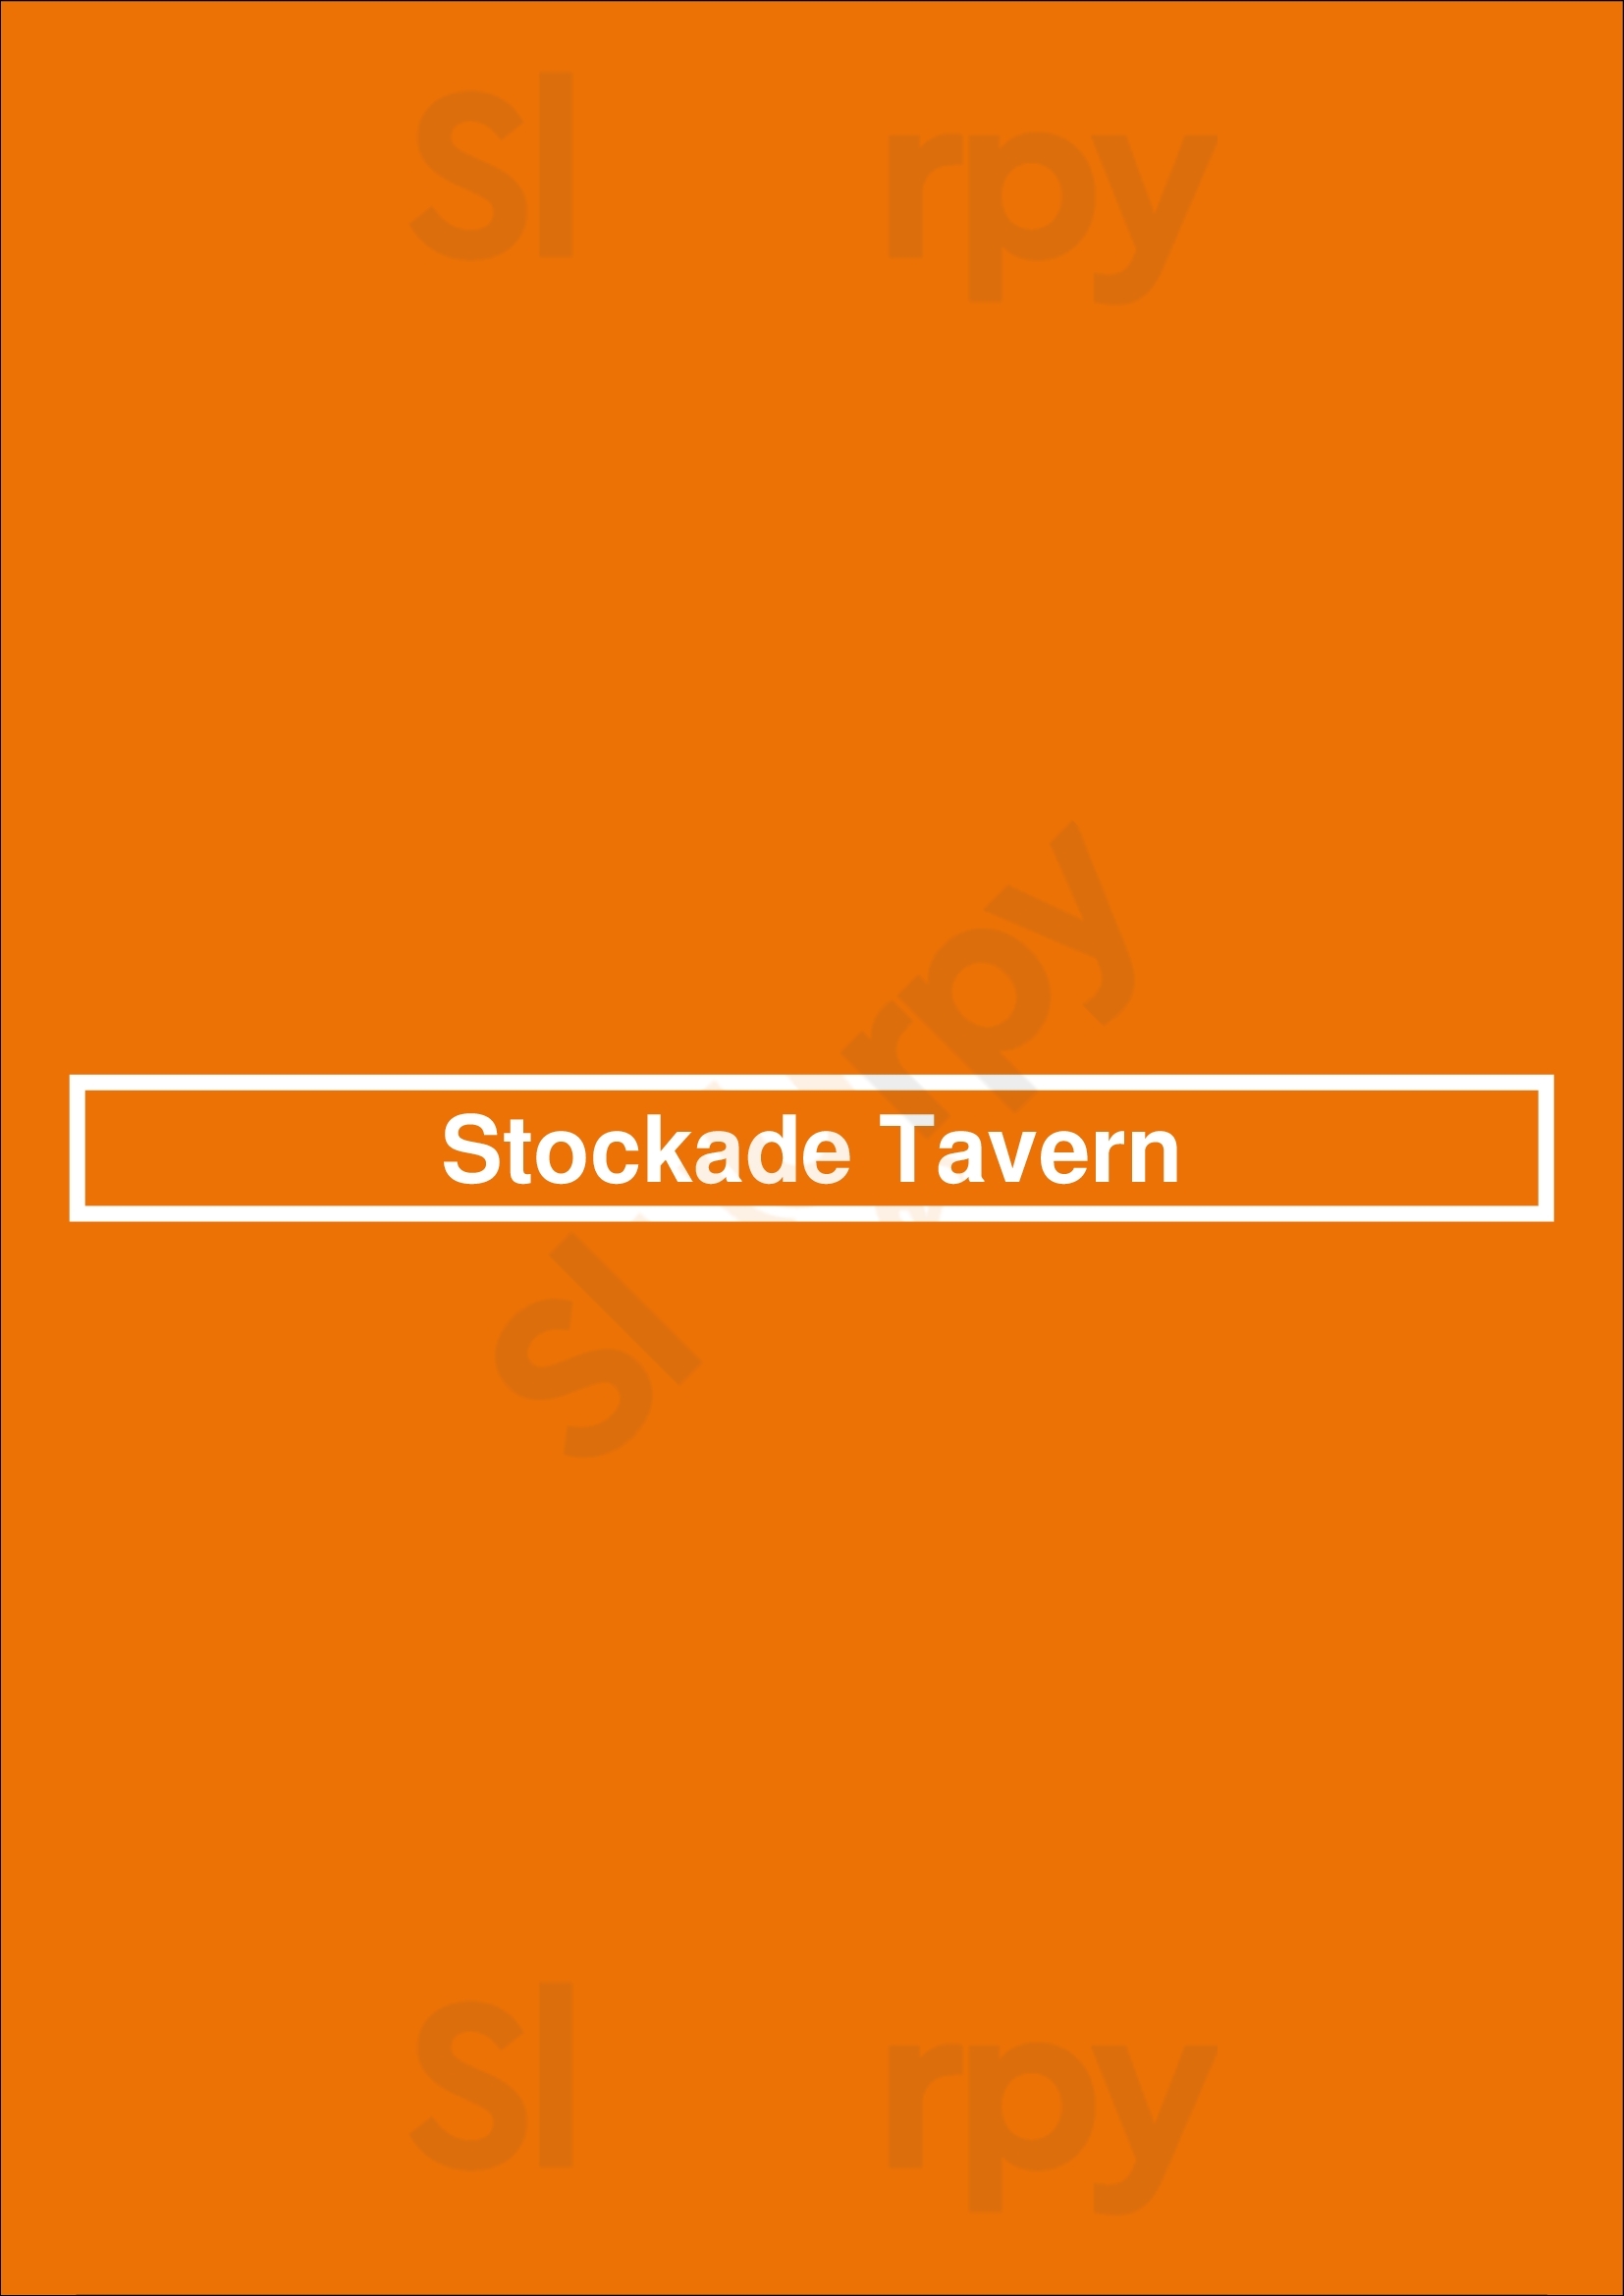 Stockade Tavern Salisbury Menu - 1